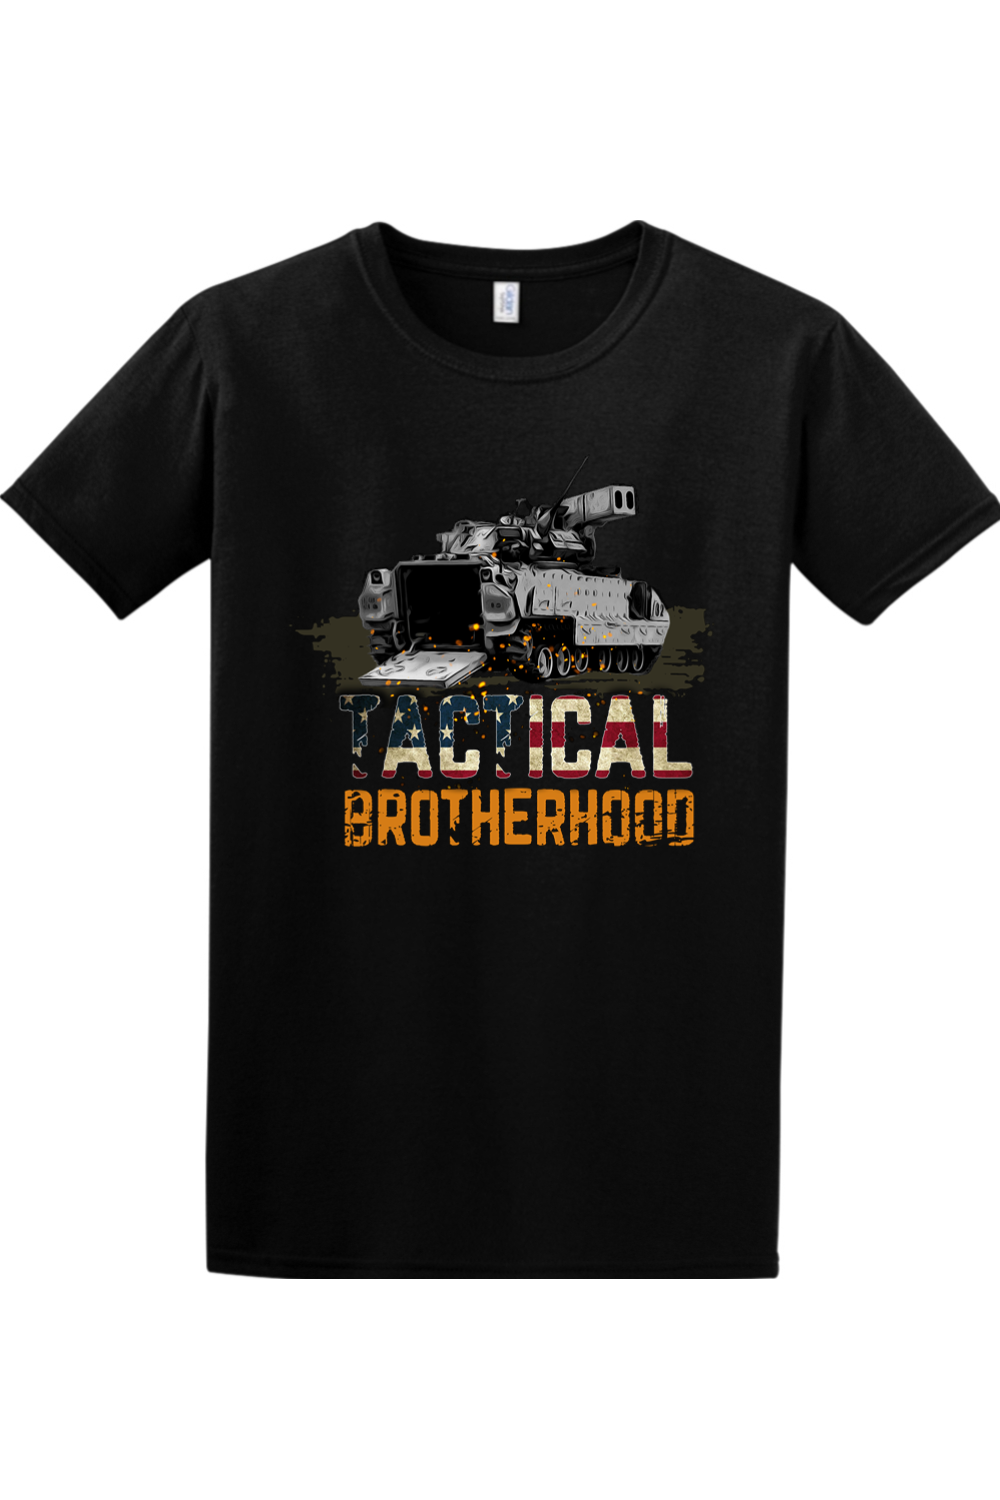 OG1 - Bradley - Tactical Brotherhood